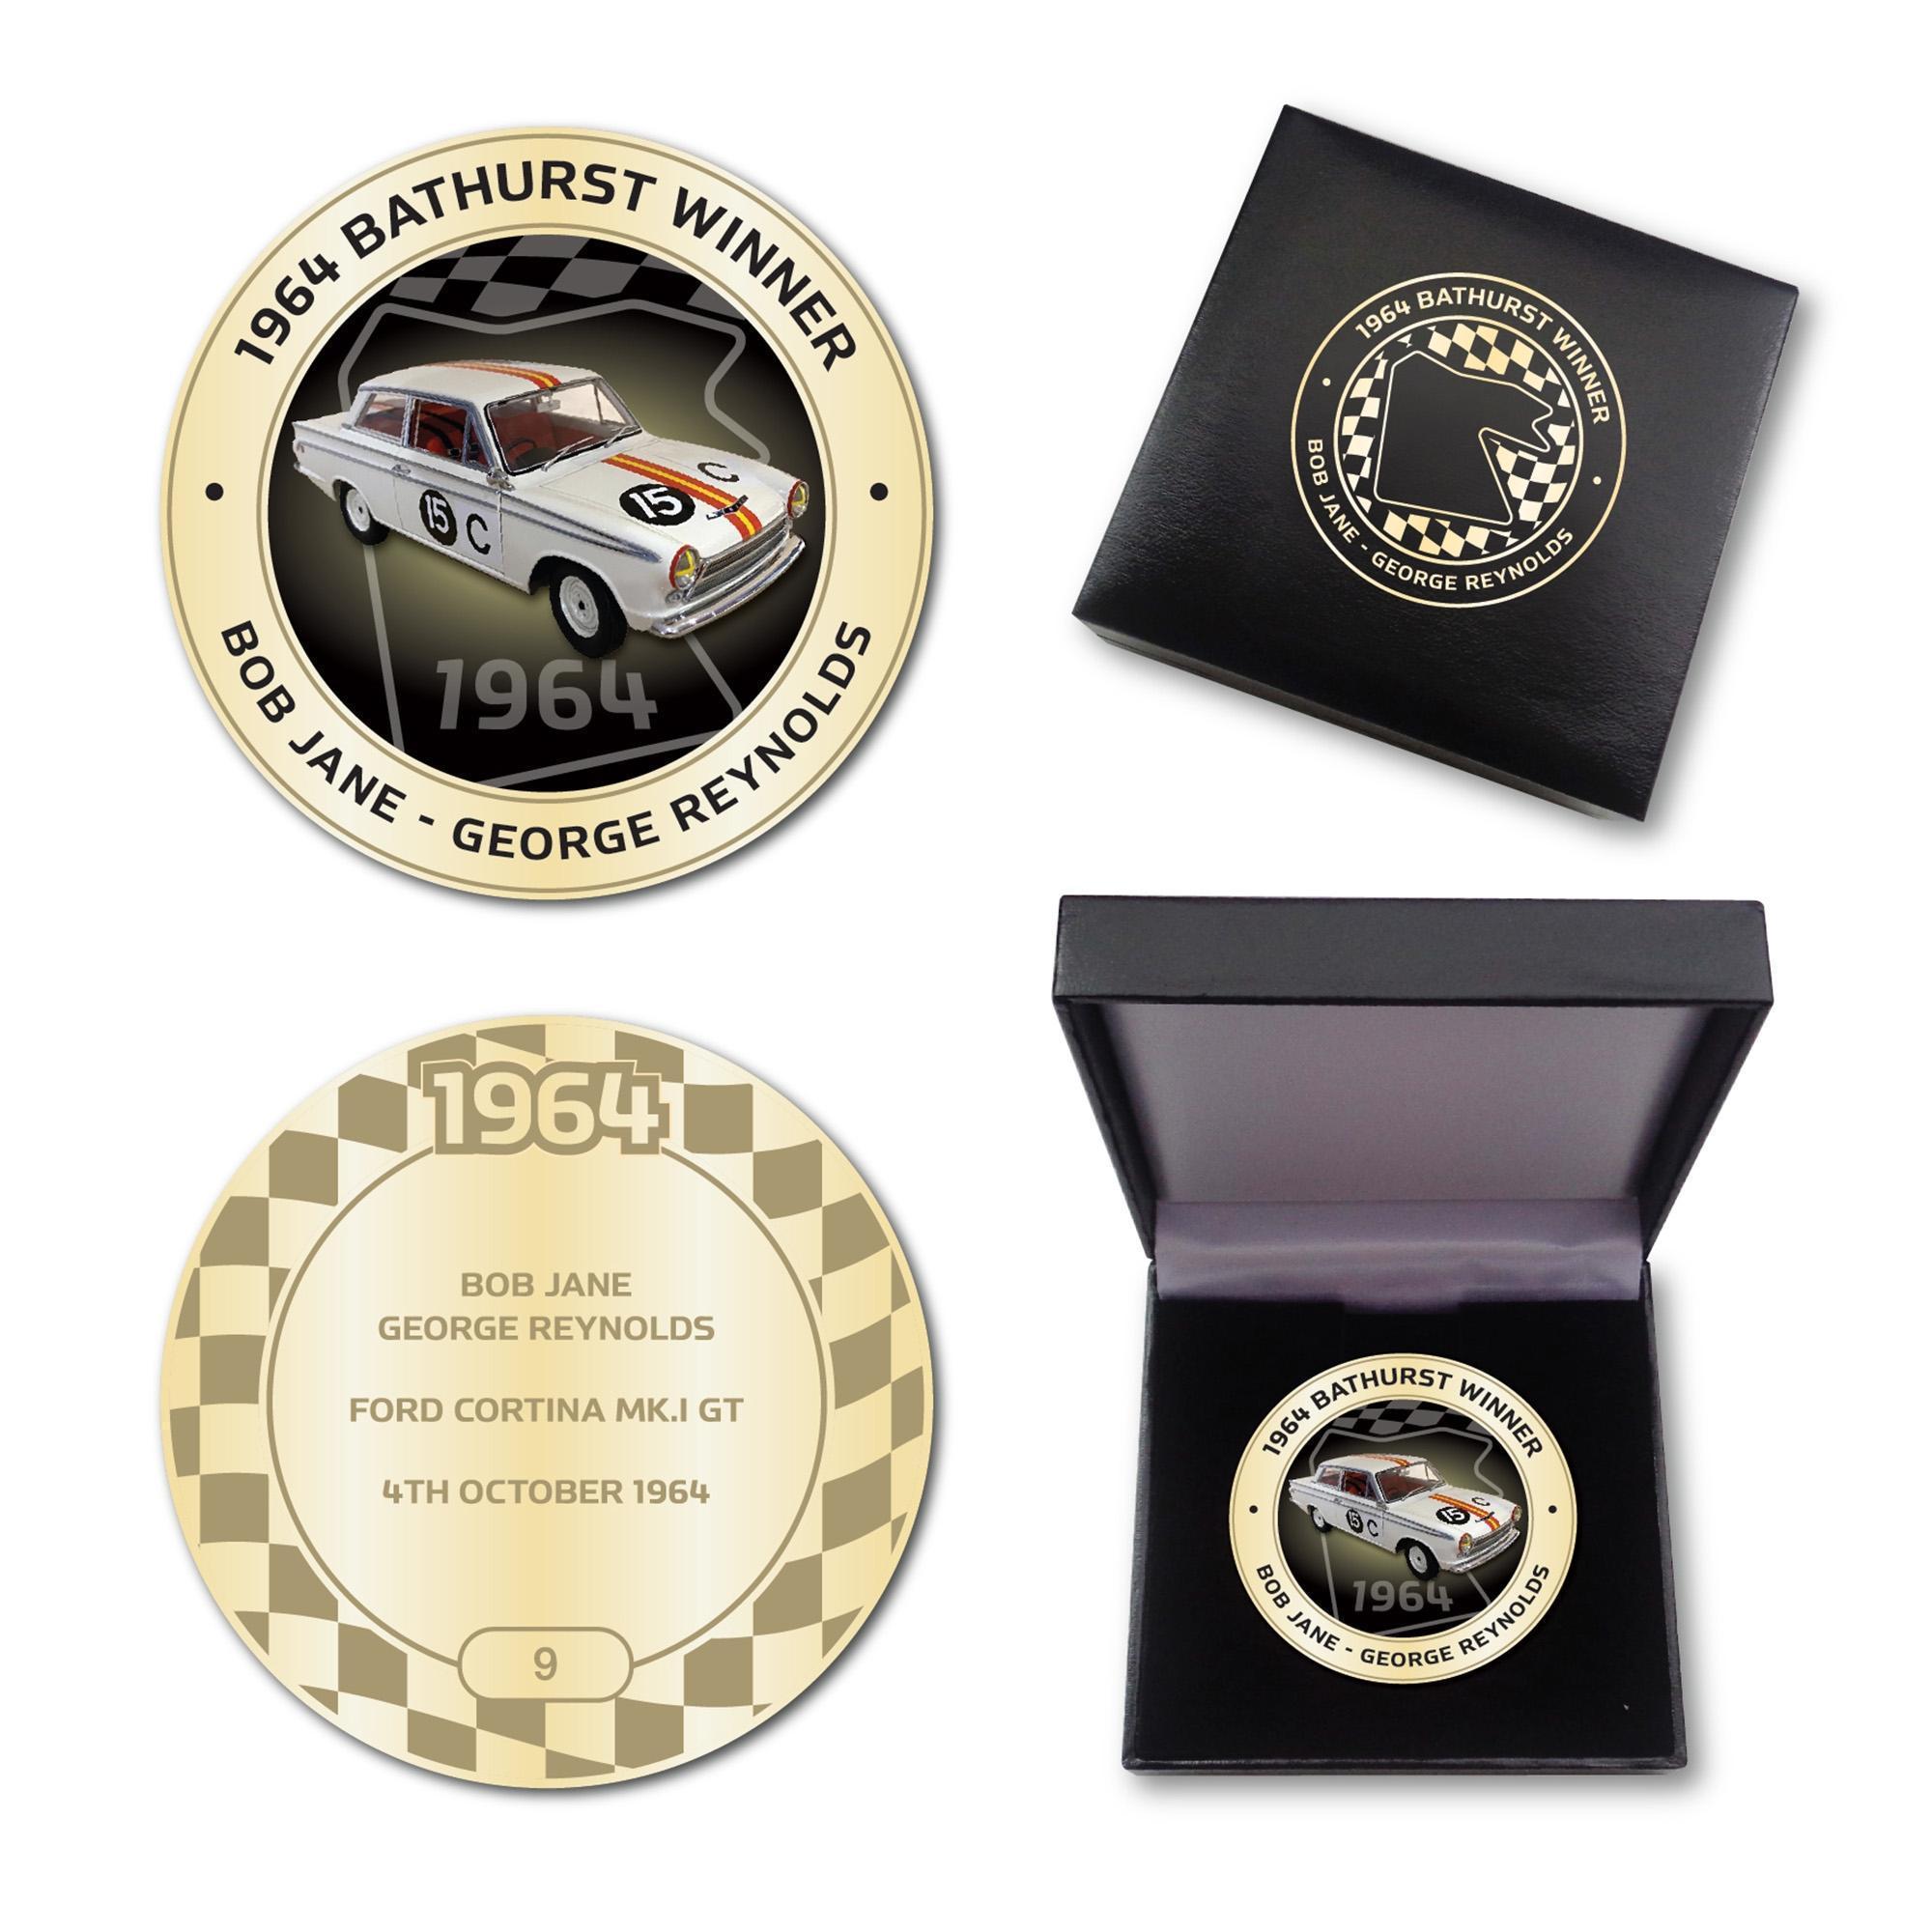 1964 Bathurst Winner Antique Gold Coloured Medallion In Box - Bob Jane George Reynolds Ford Cortina Mk I GT